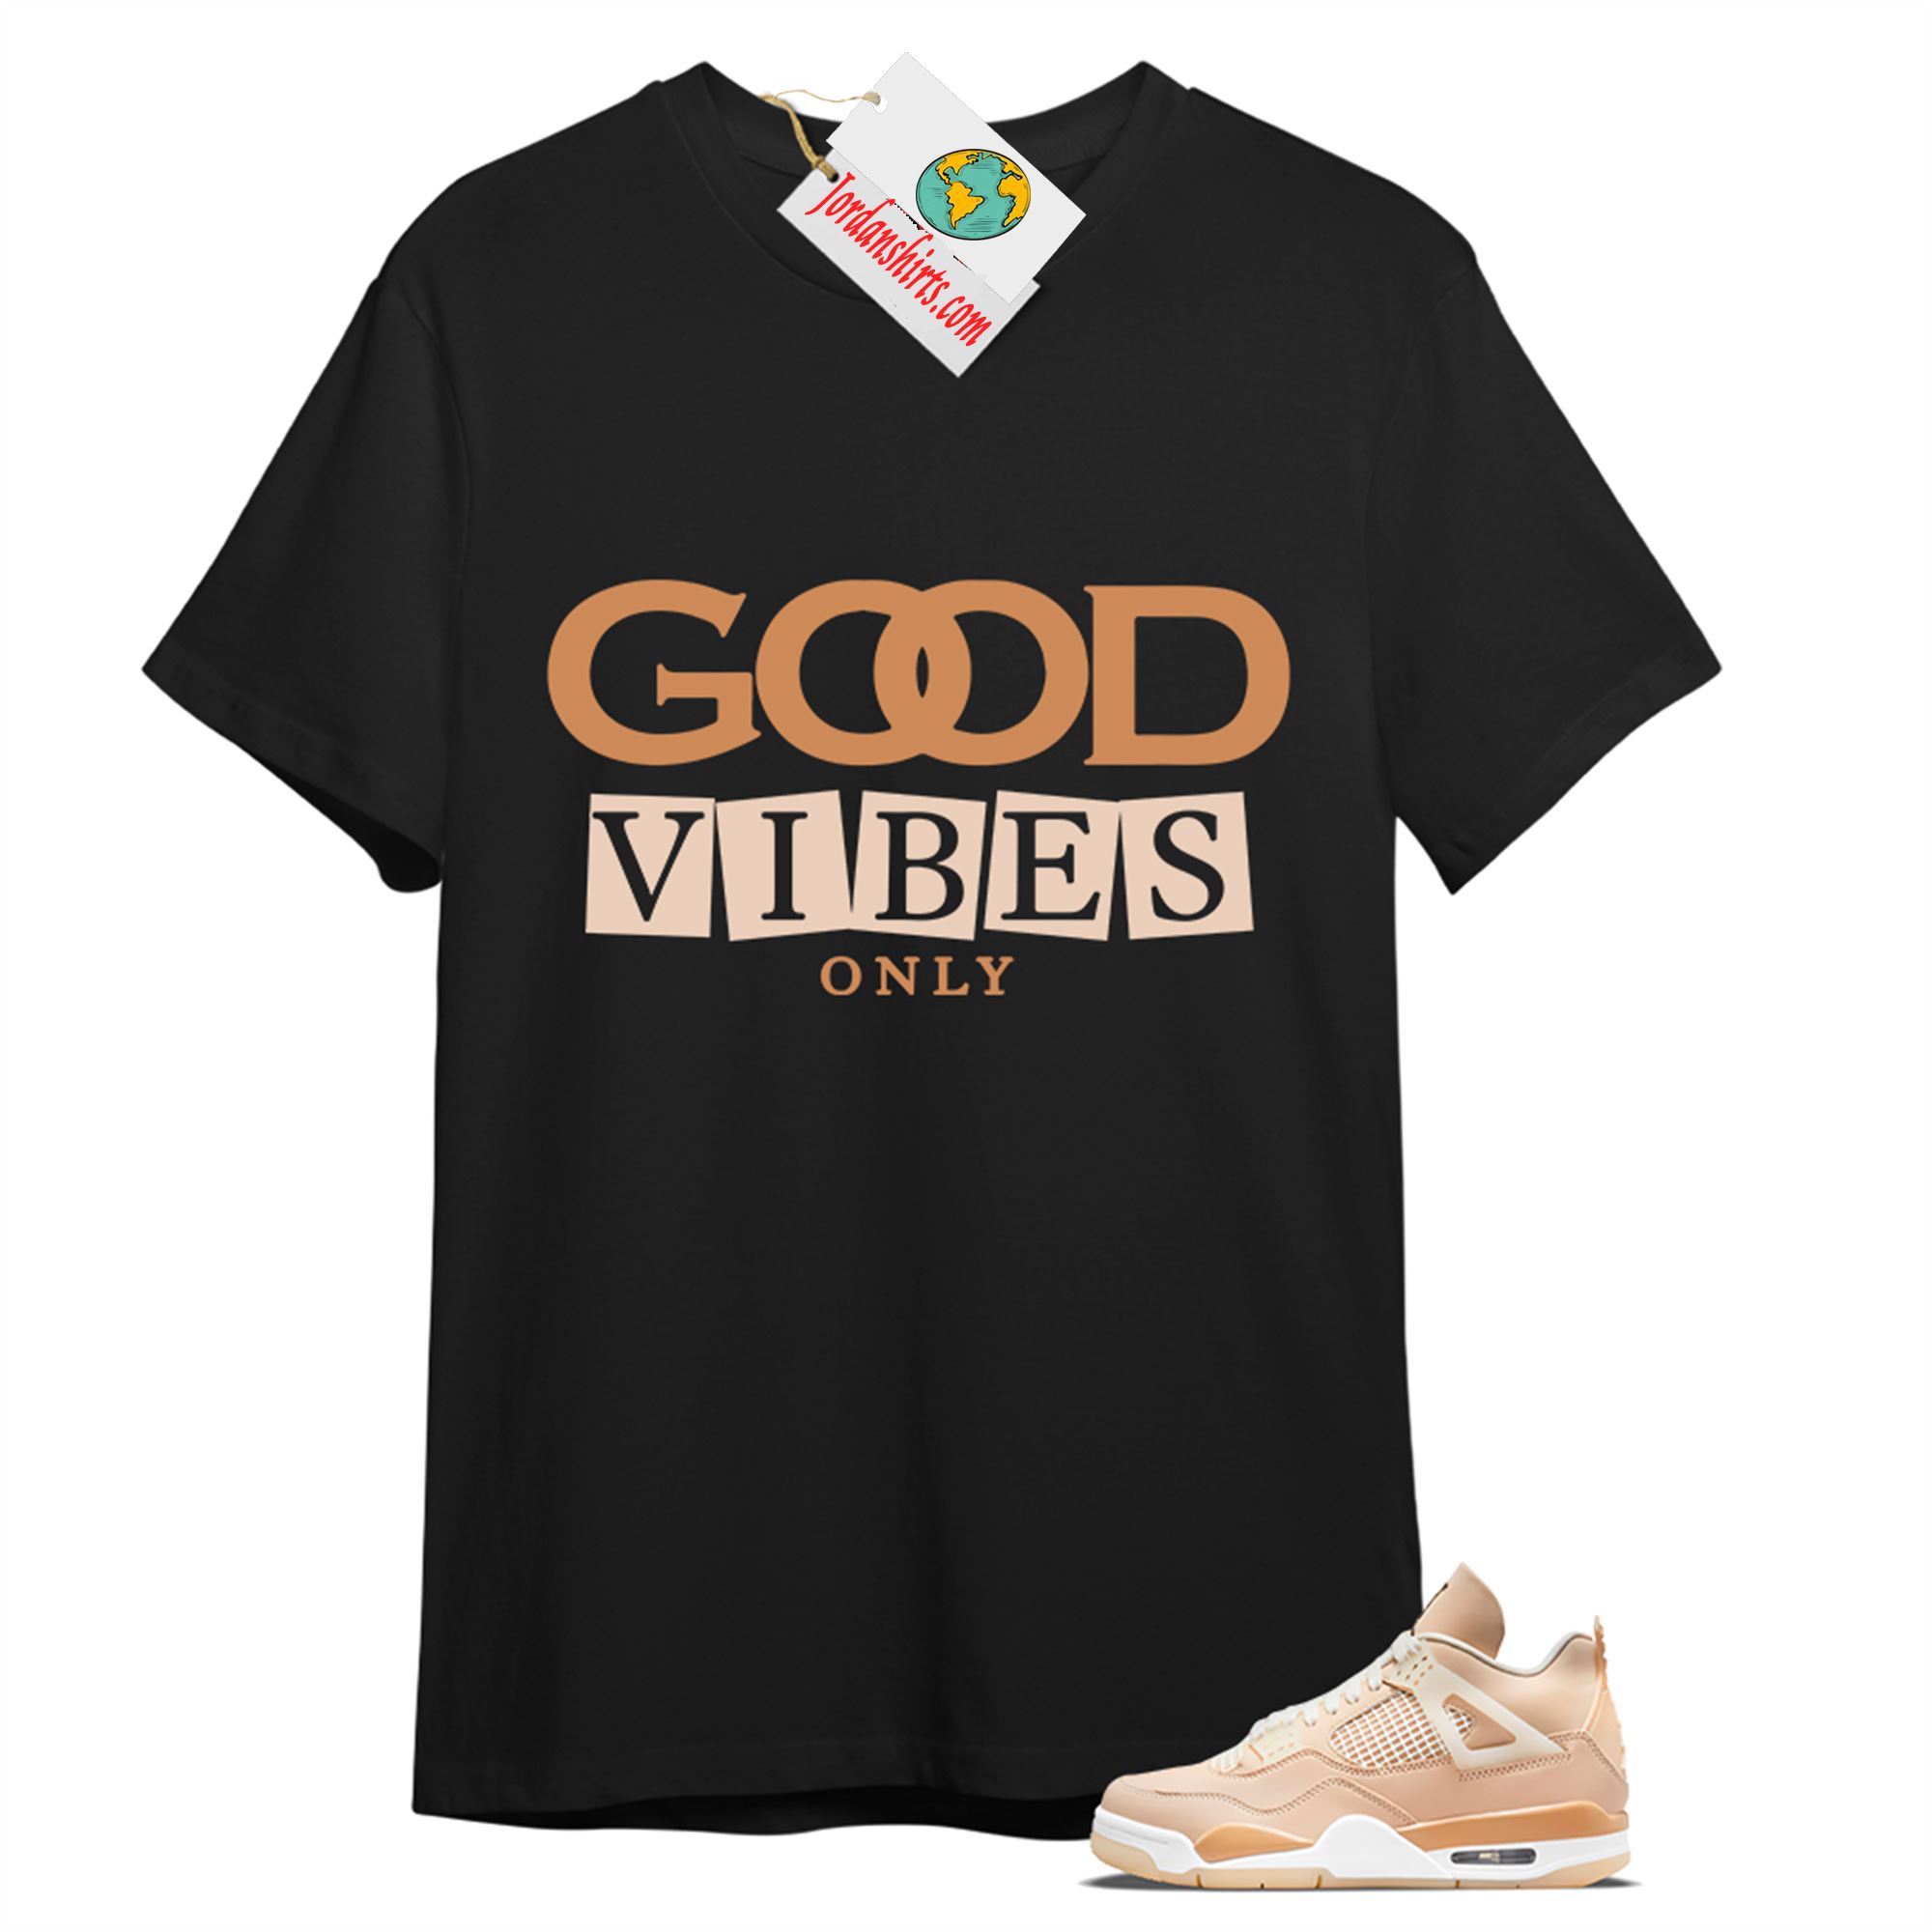 Jordan 4 Shirt, Good Vibes Only Black T-shirt Air Jordan 4 Shimmer 4s Full Size Up To 5xl